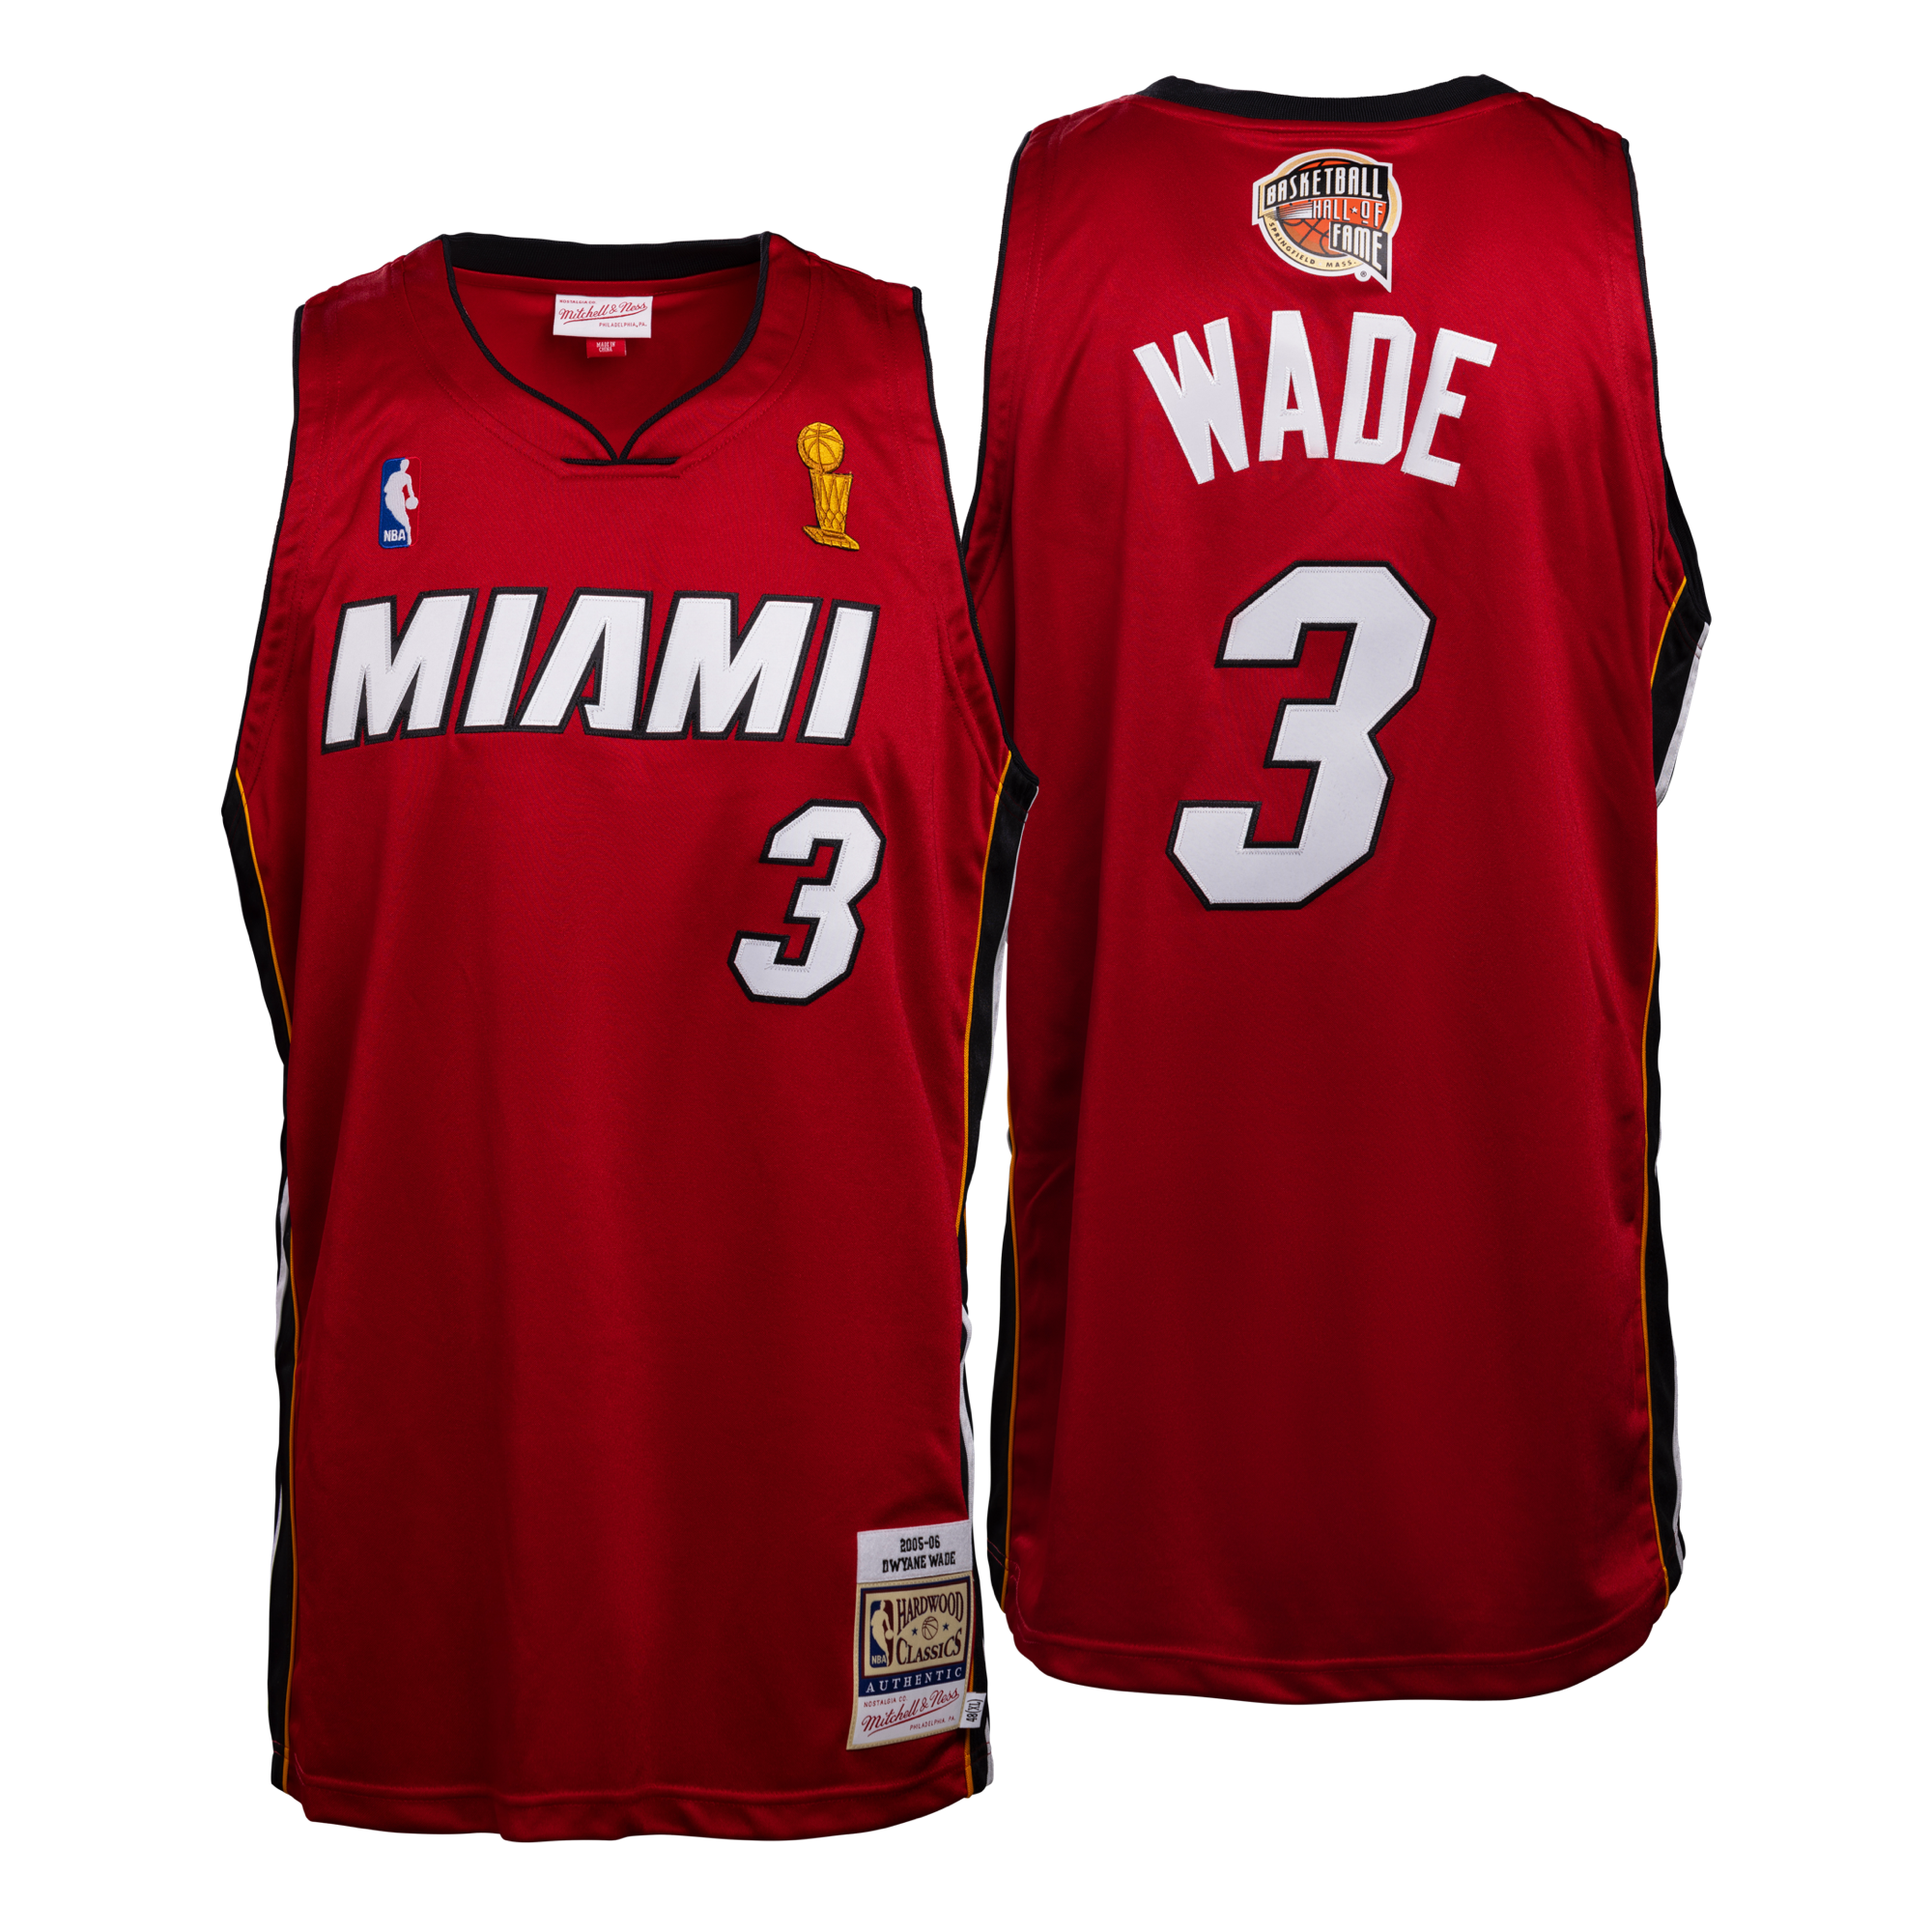 Nike Dwyane Wade NBA Shirts for sale